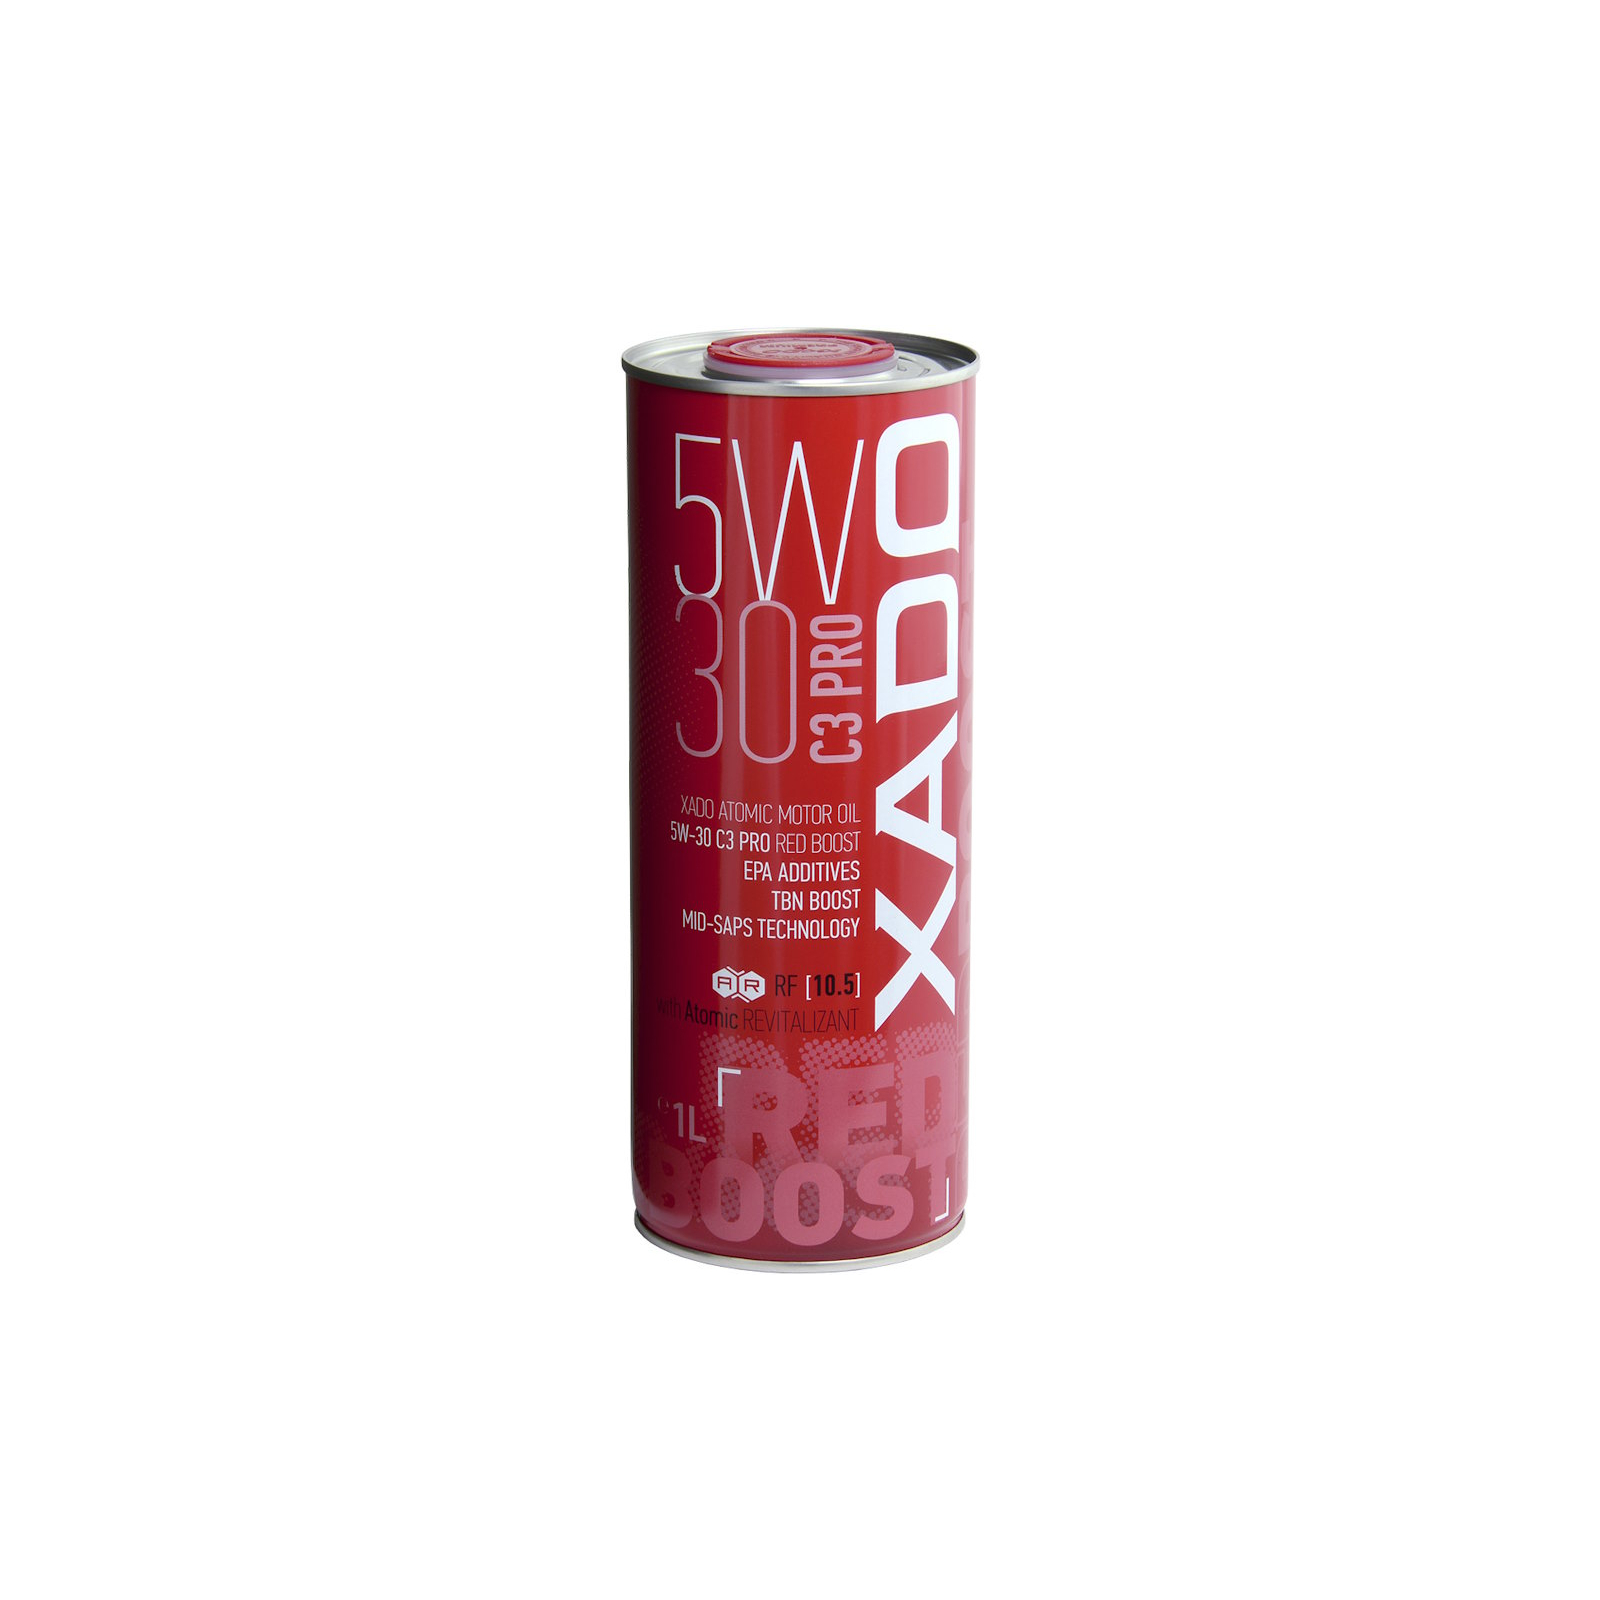 Моторное масло Xado 5W-30 C3 Pro  Red Boost     ( ж/б 1 л ) (XA 26168)